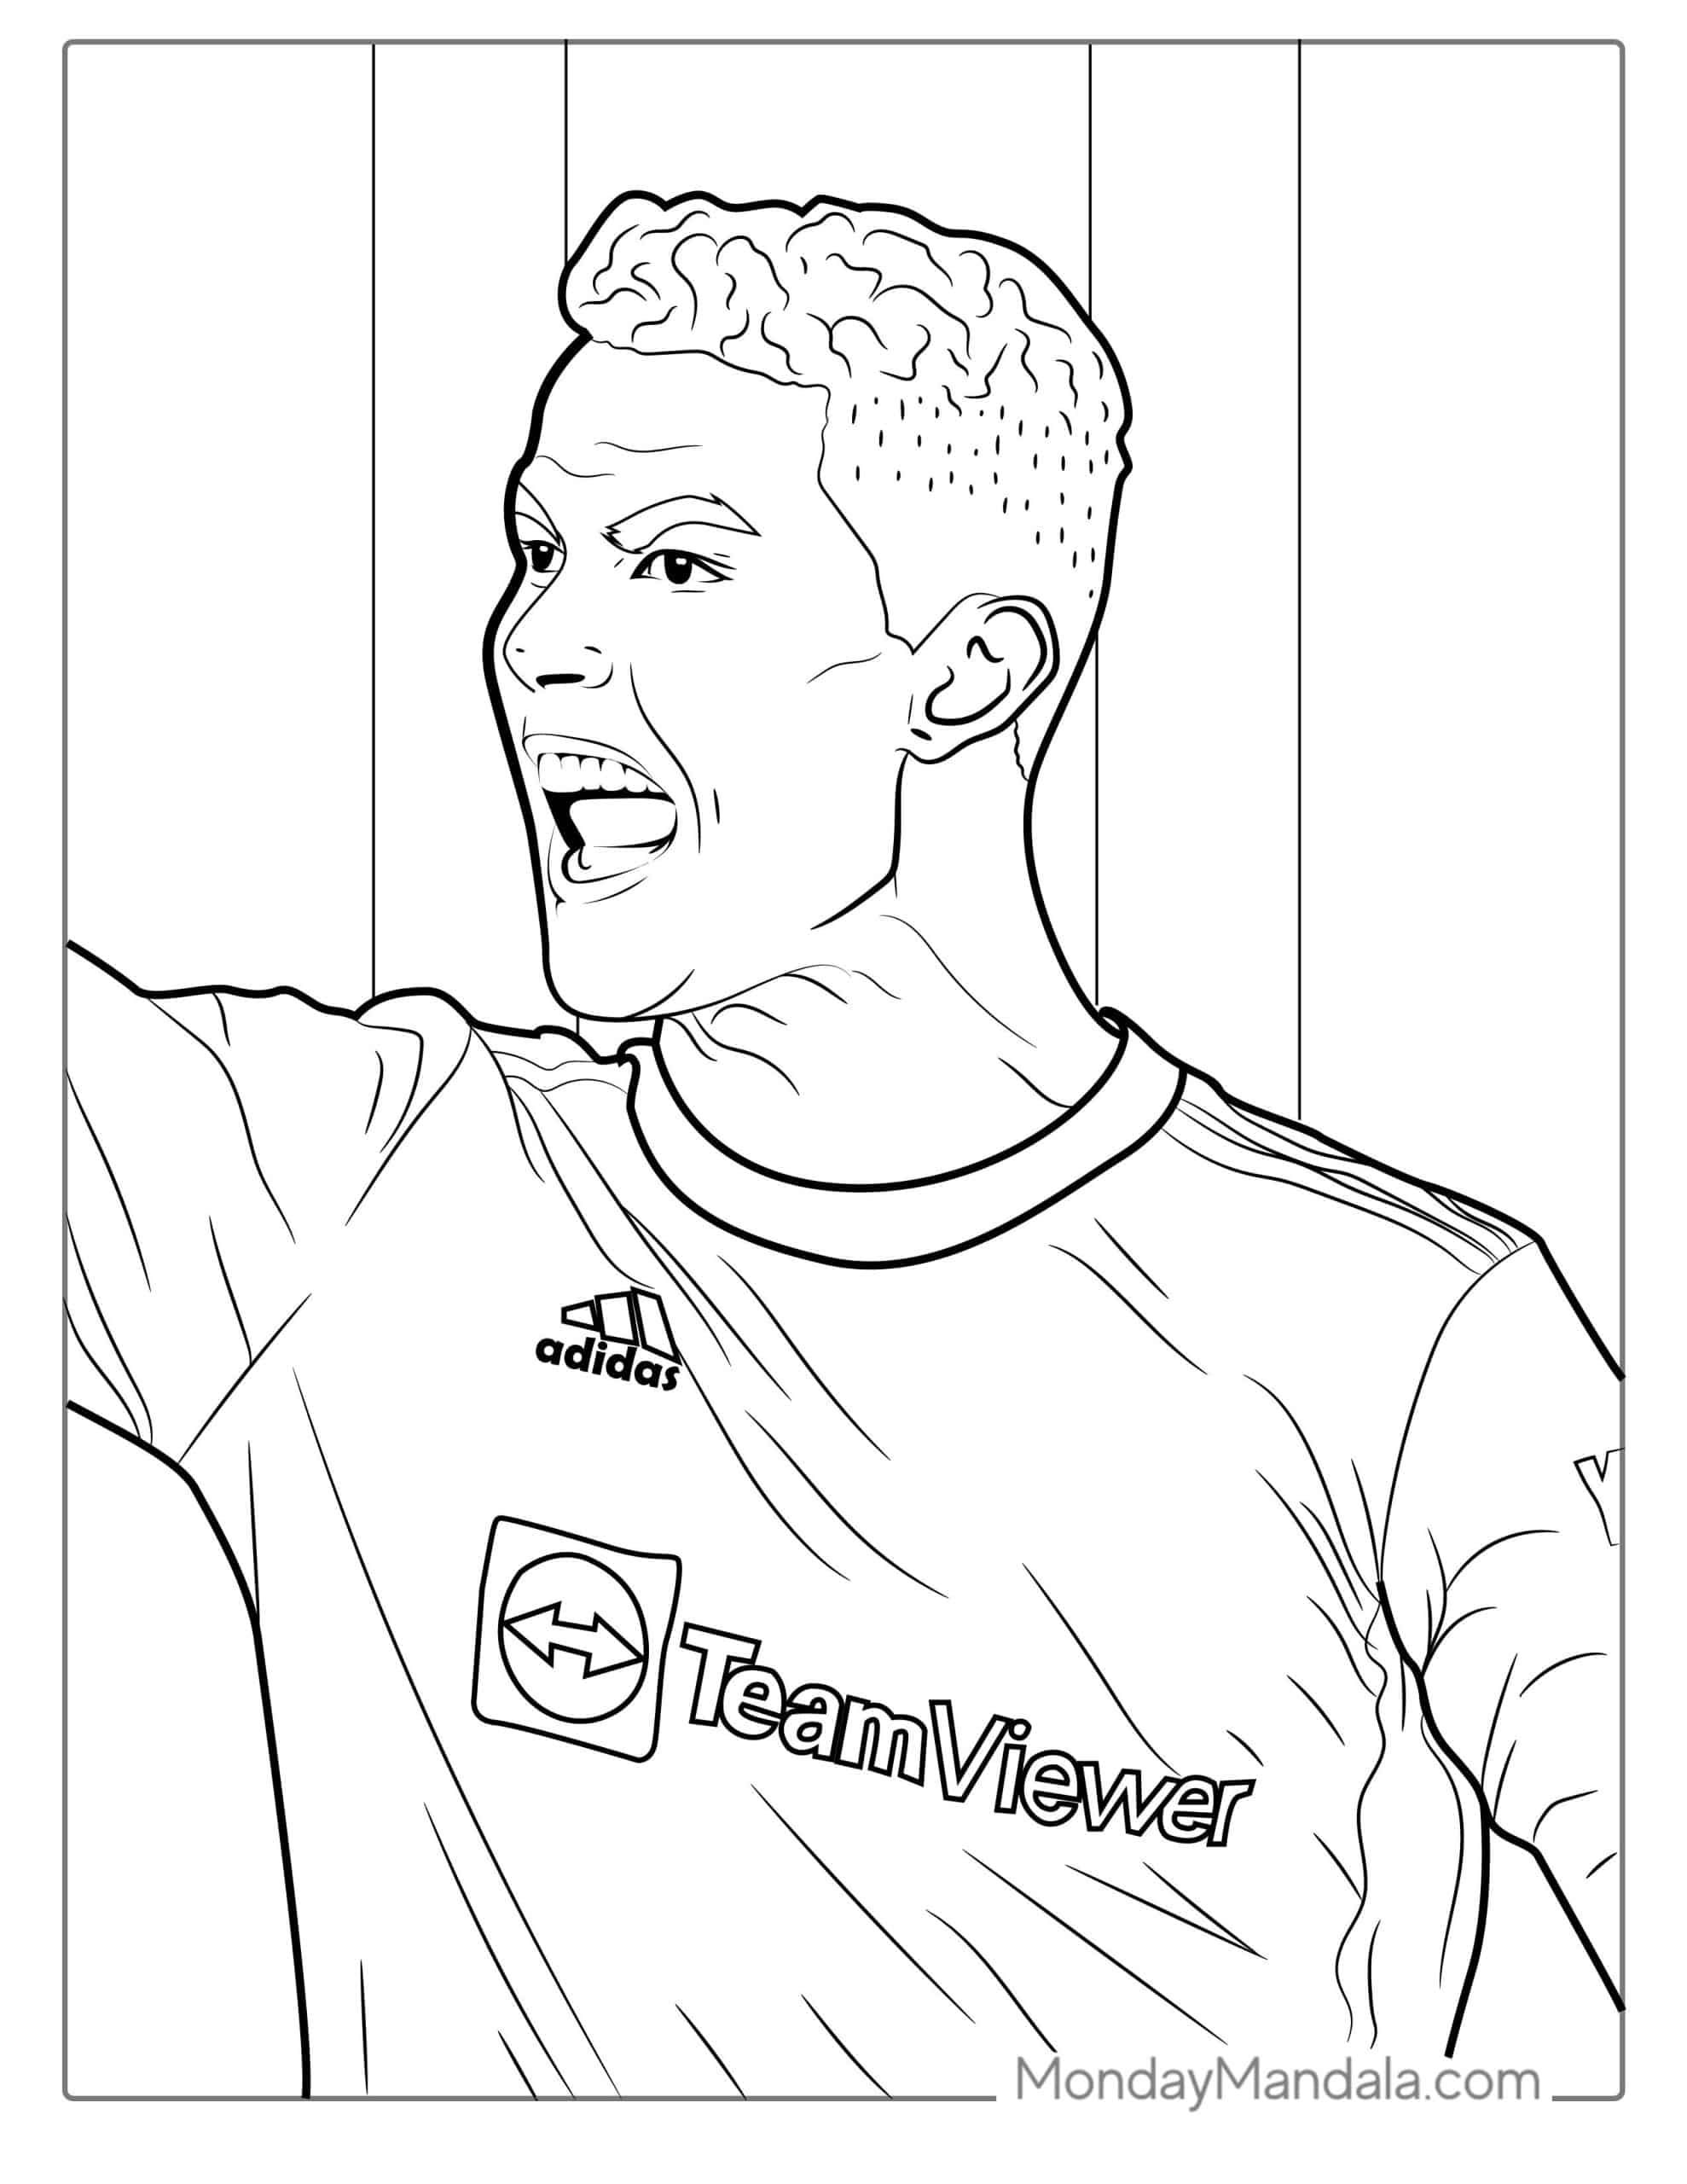 Ronaldo coloring pages free pdf printables cristiano ronaldo ronaldo coloring pages